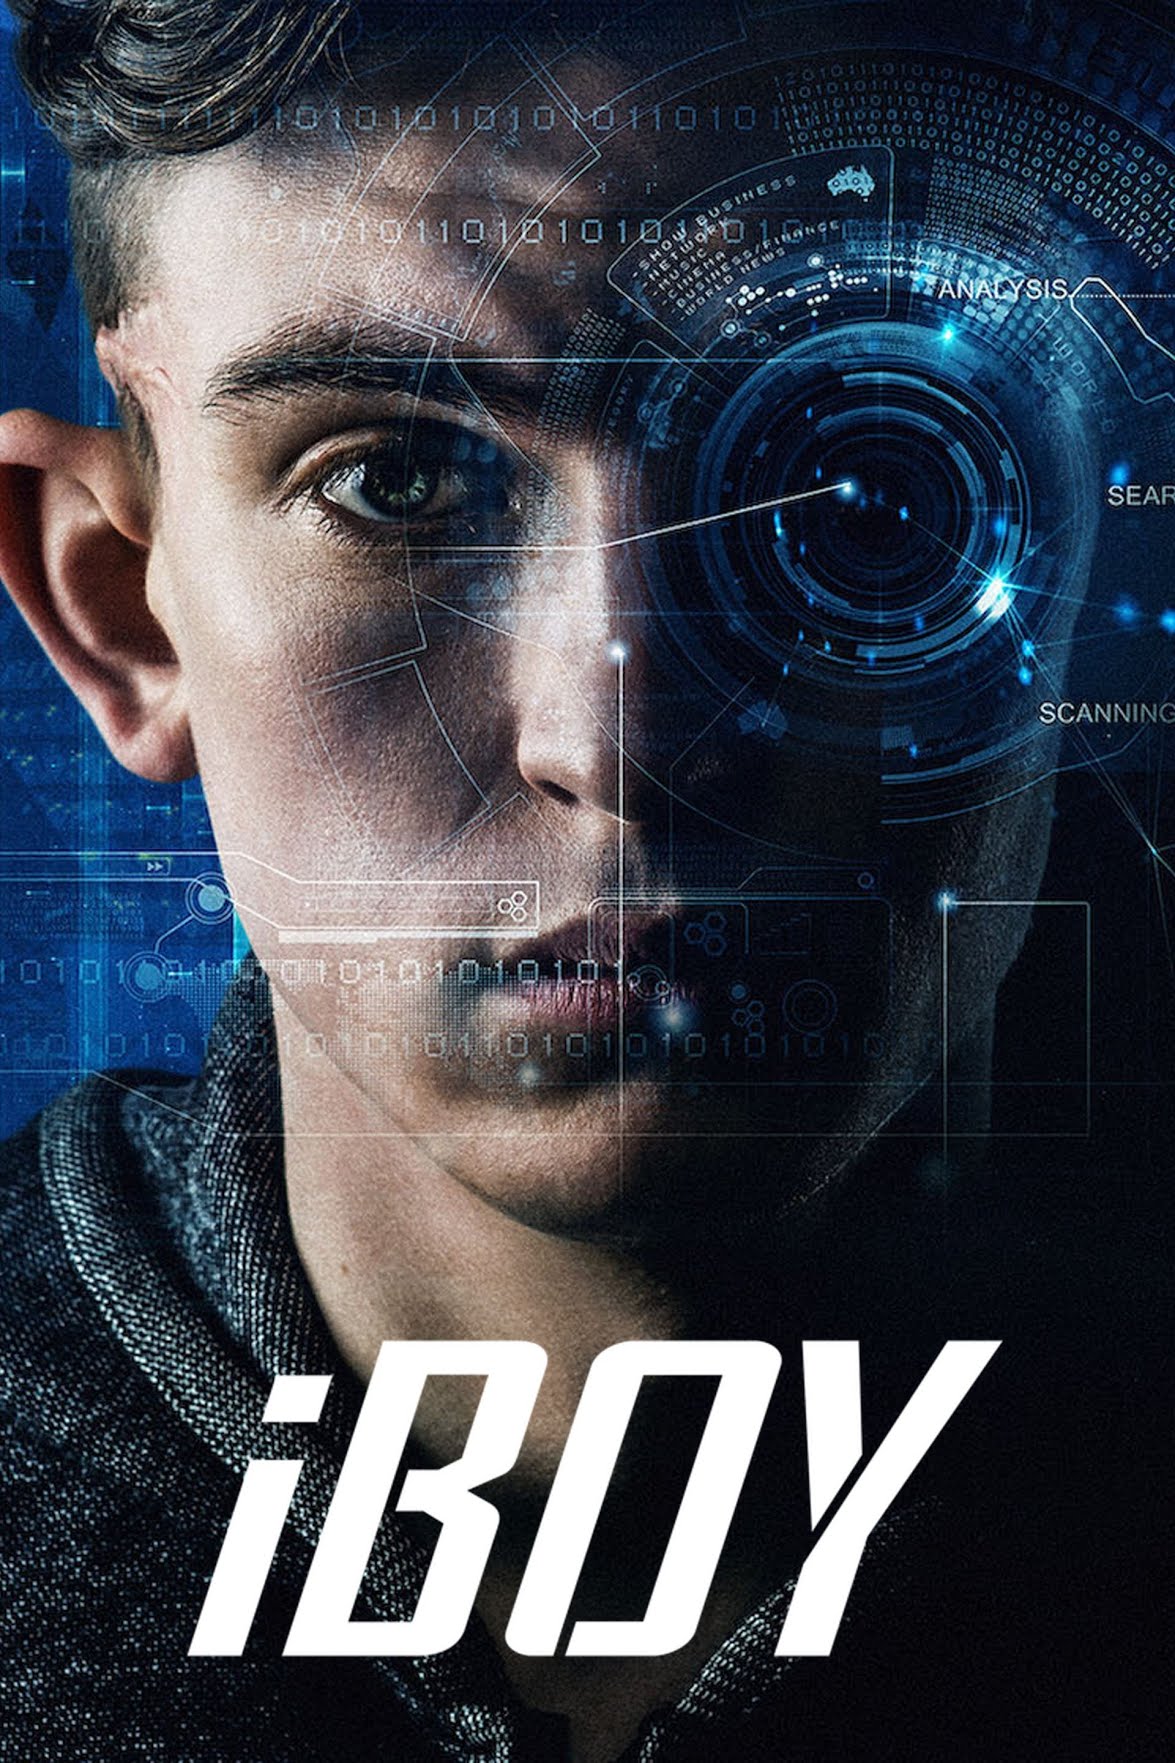 iBoy [HD] (2017)